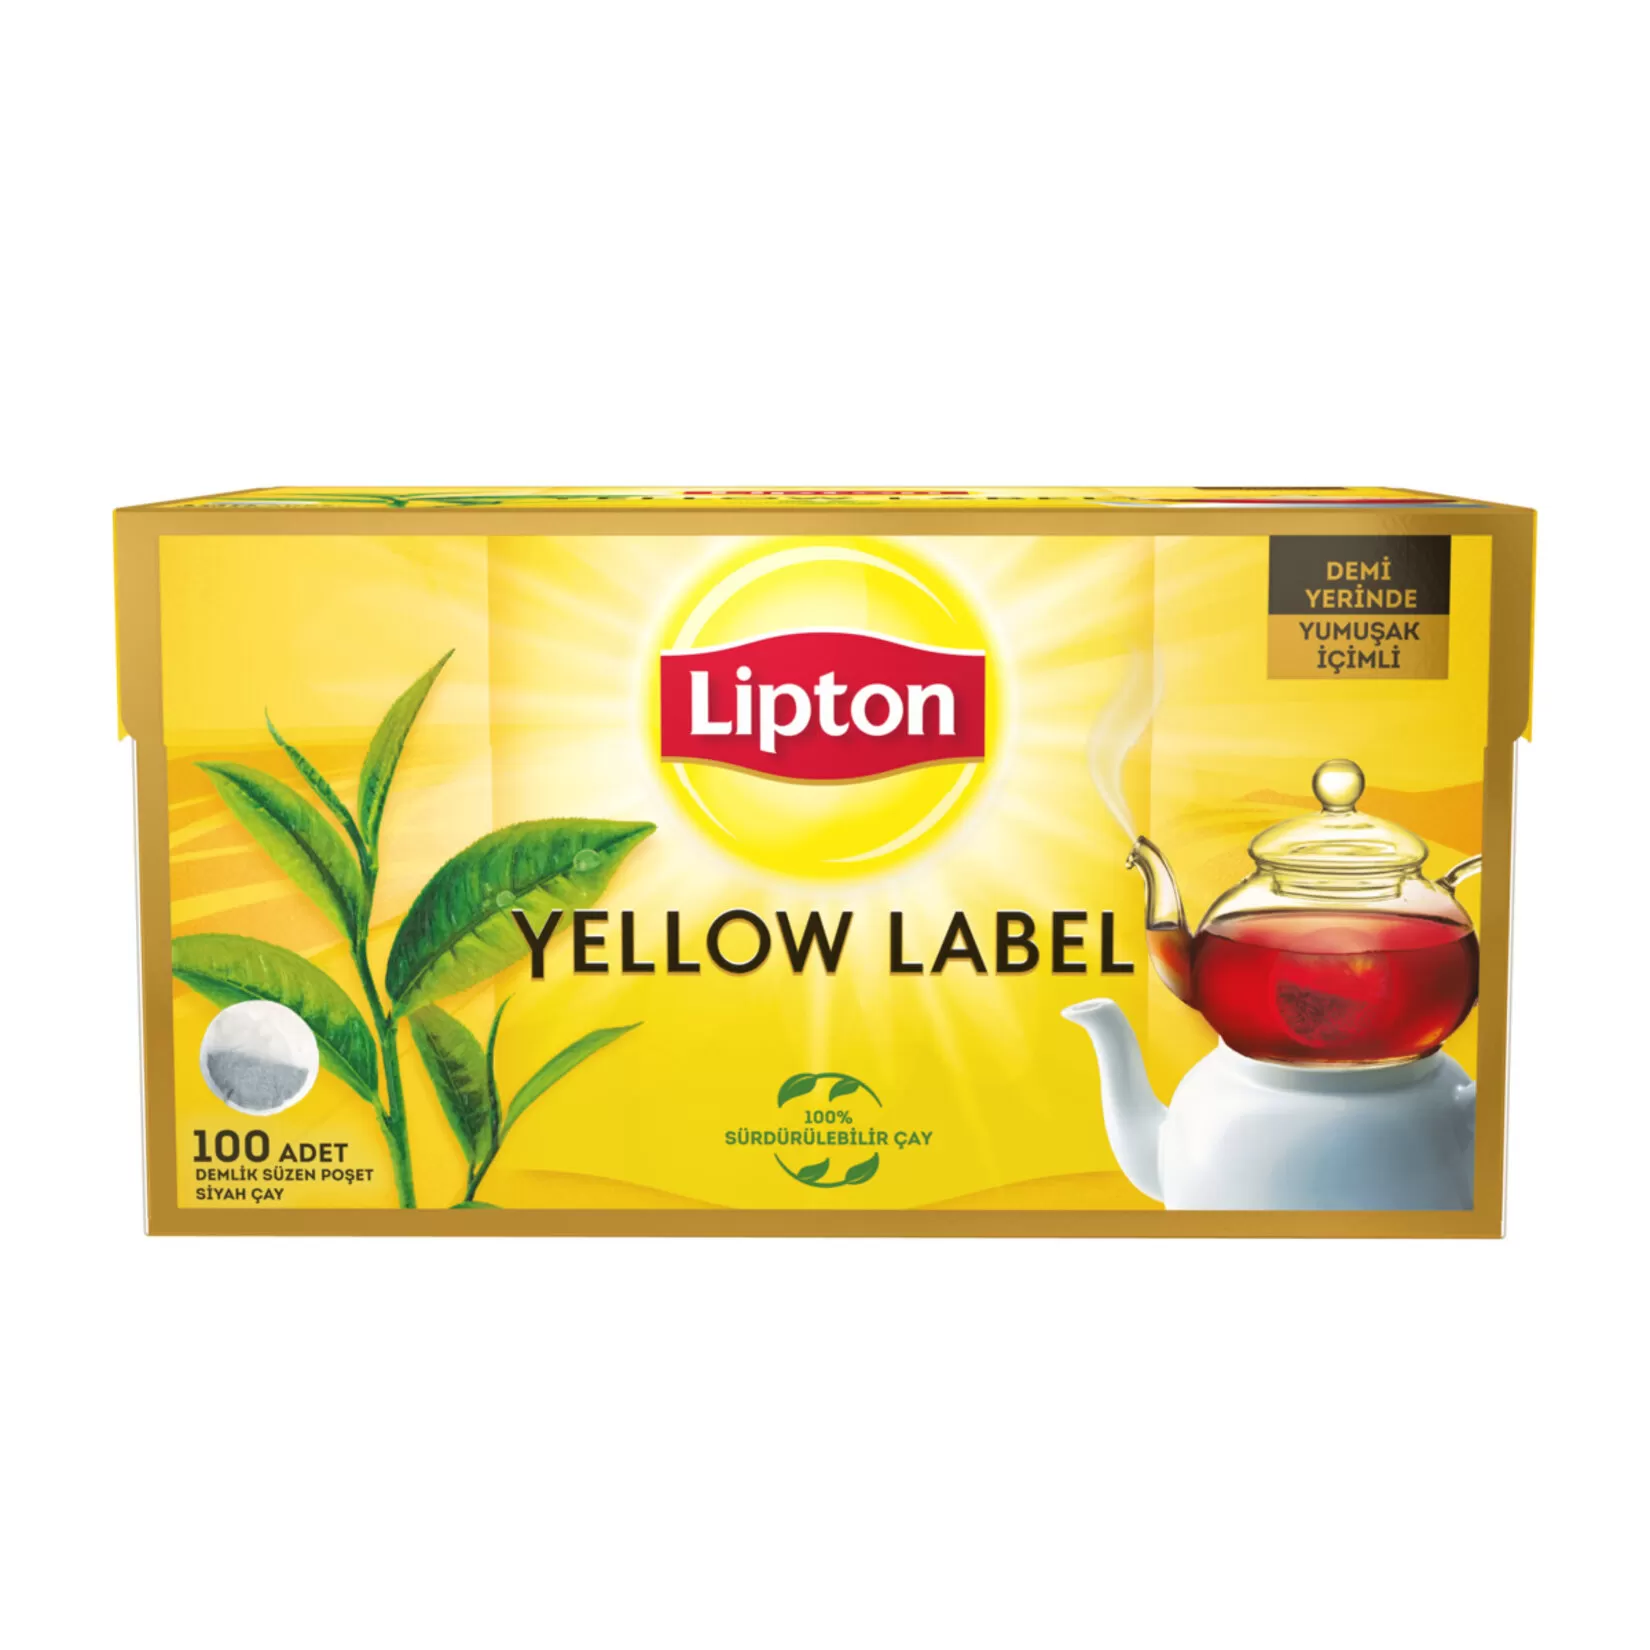 Lipton Yellow Label Demlik Poşet Çay 100'lü 2 Paket